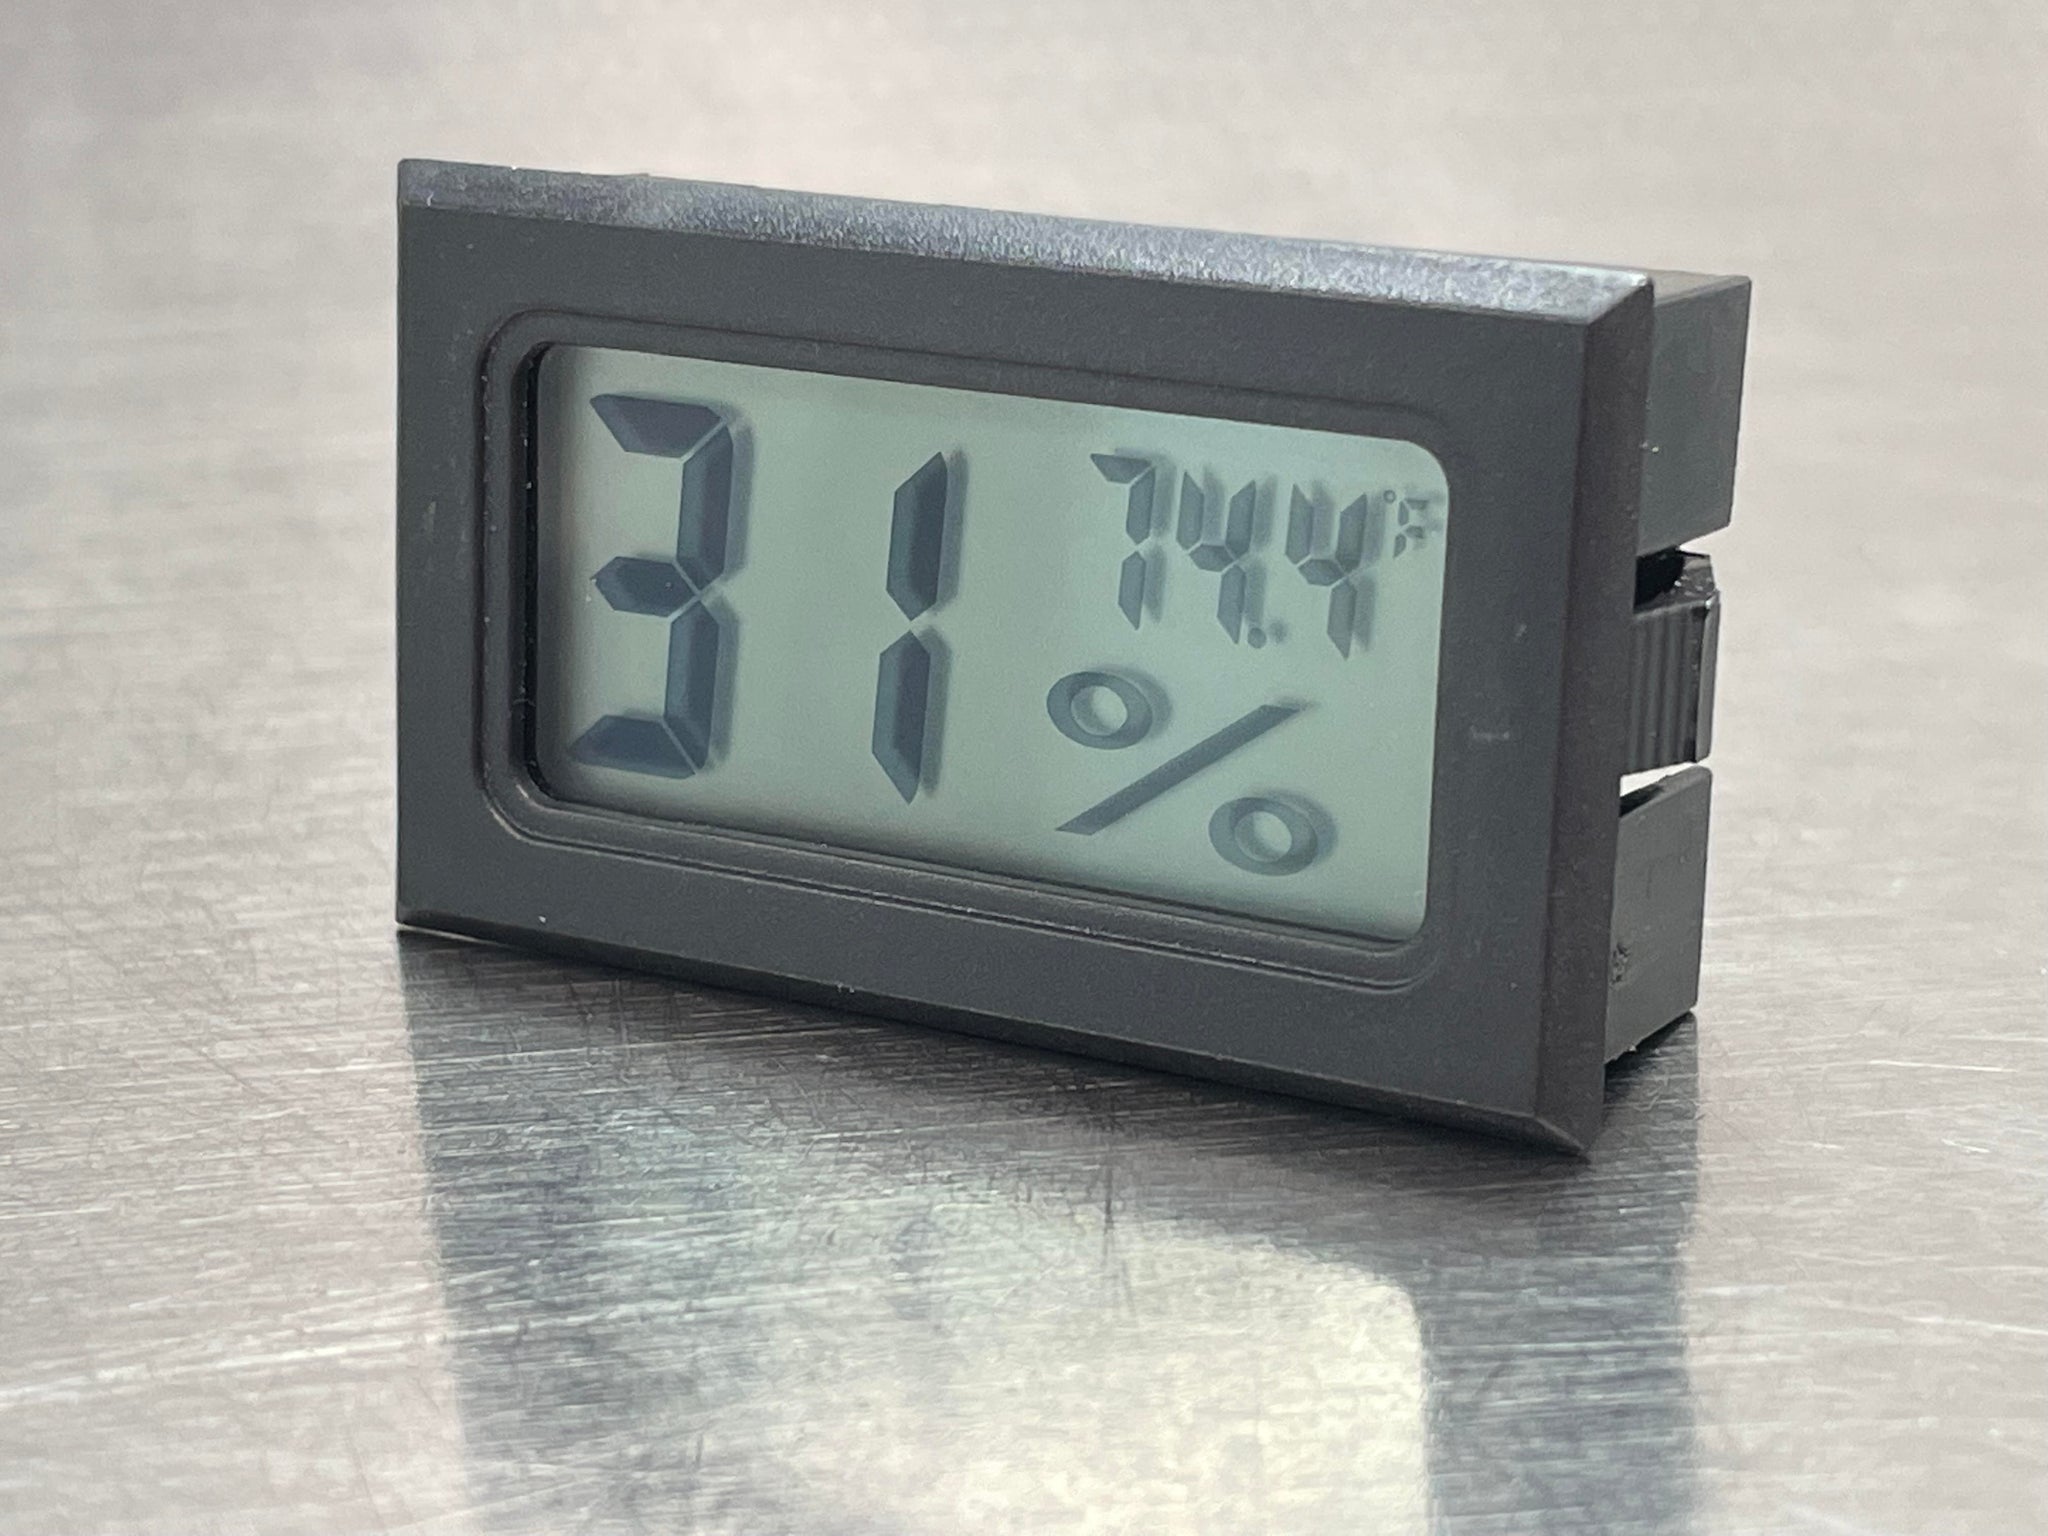 Small Digital Hygrometer with Humidity/Temperature – Midnight Mushroom Co.